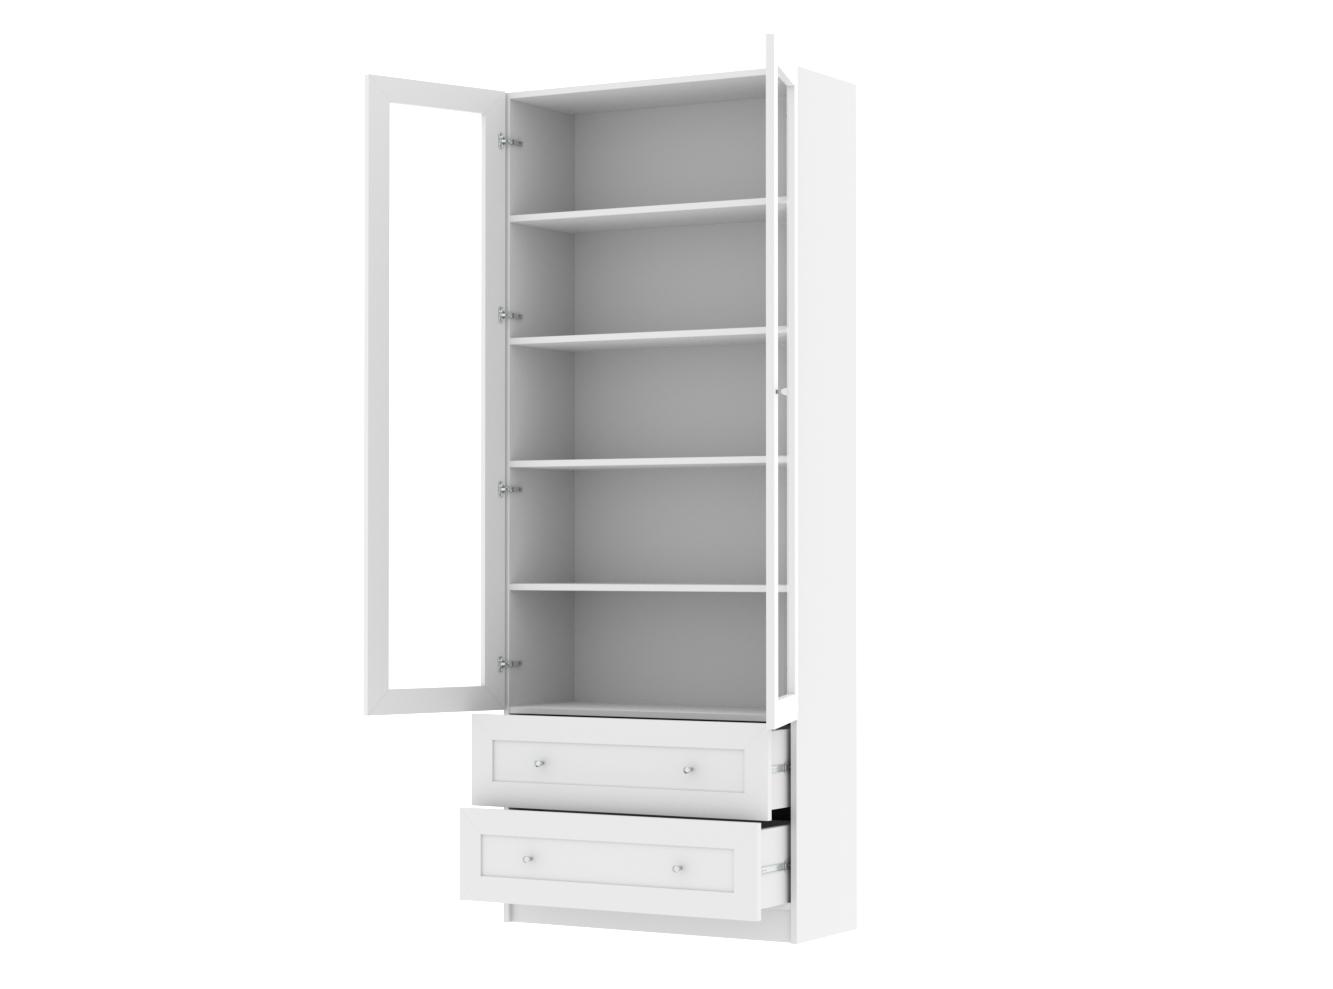  Книжный шкаф Билли 313 white ИКЕА (IKEA) изображение товара